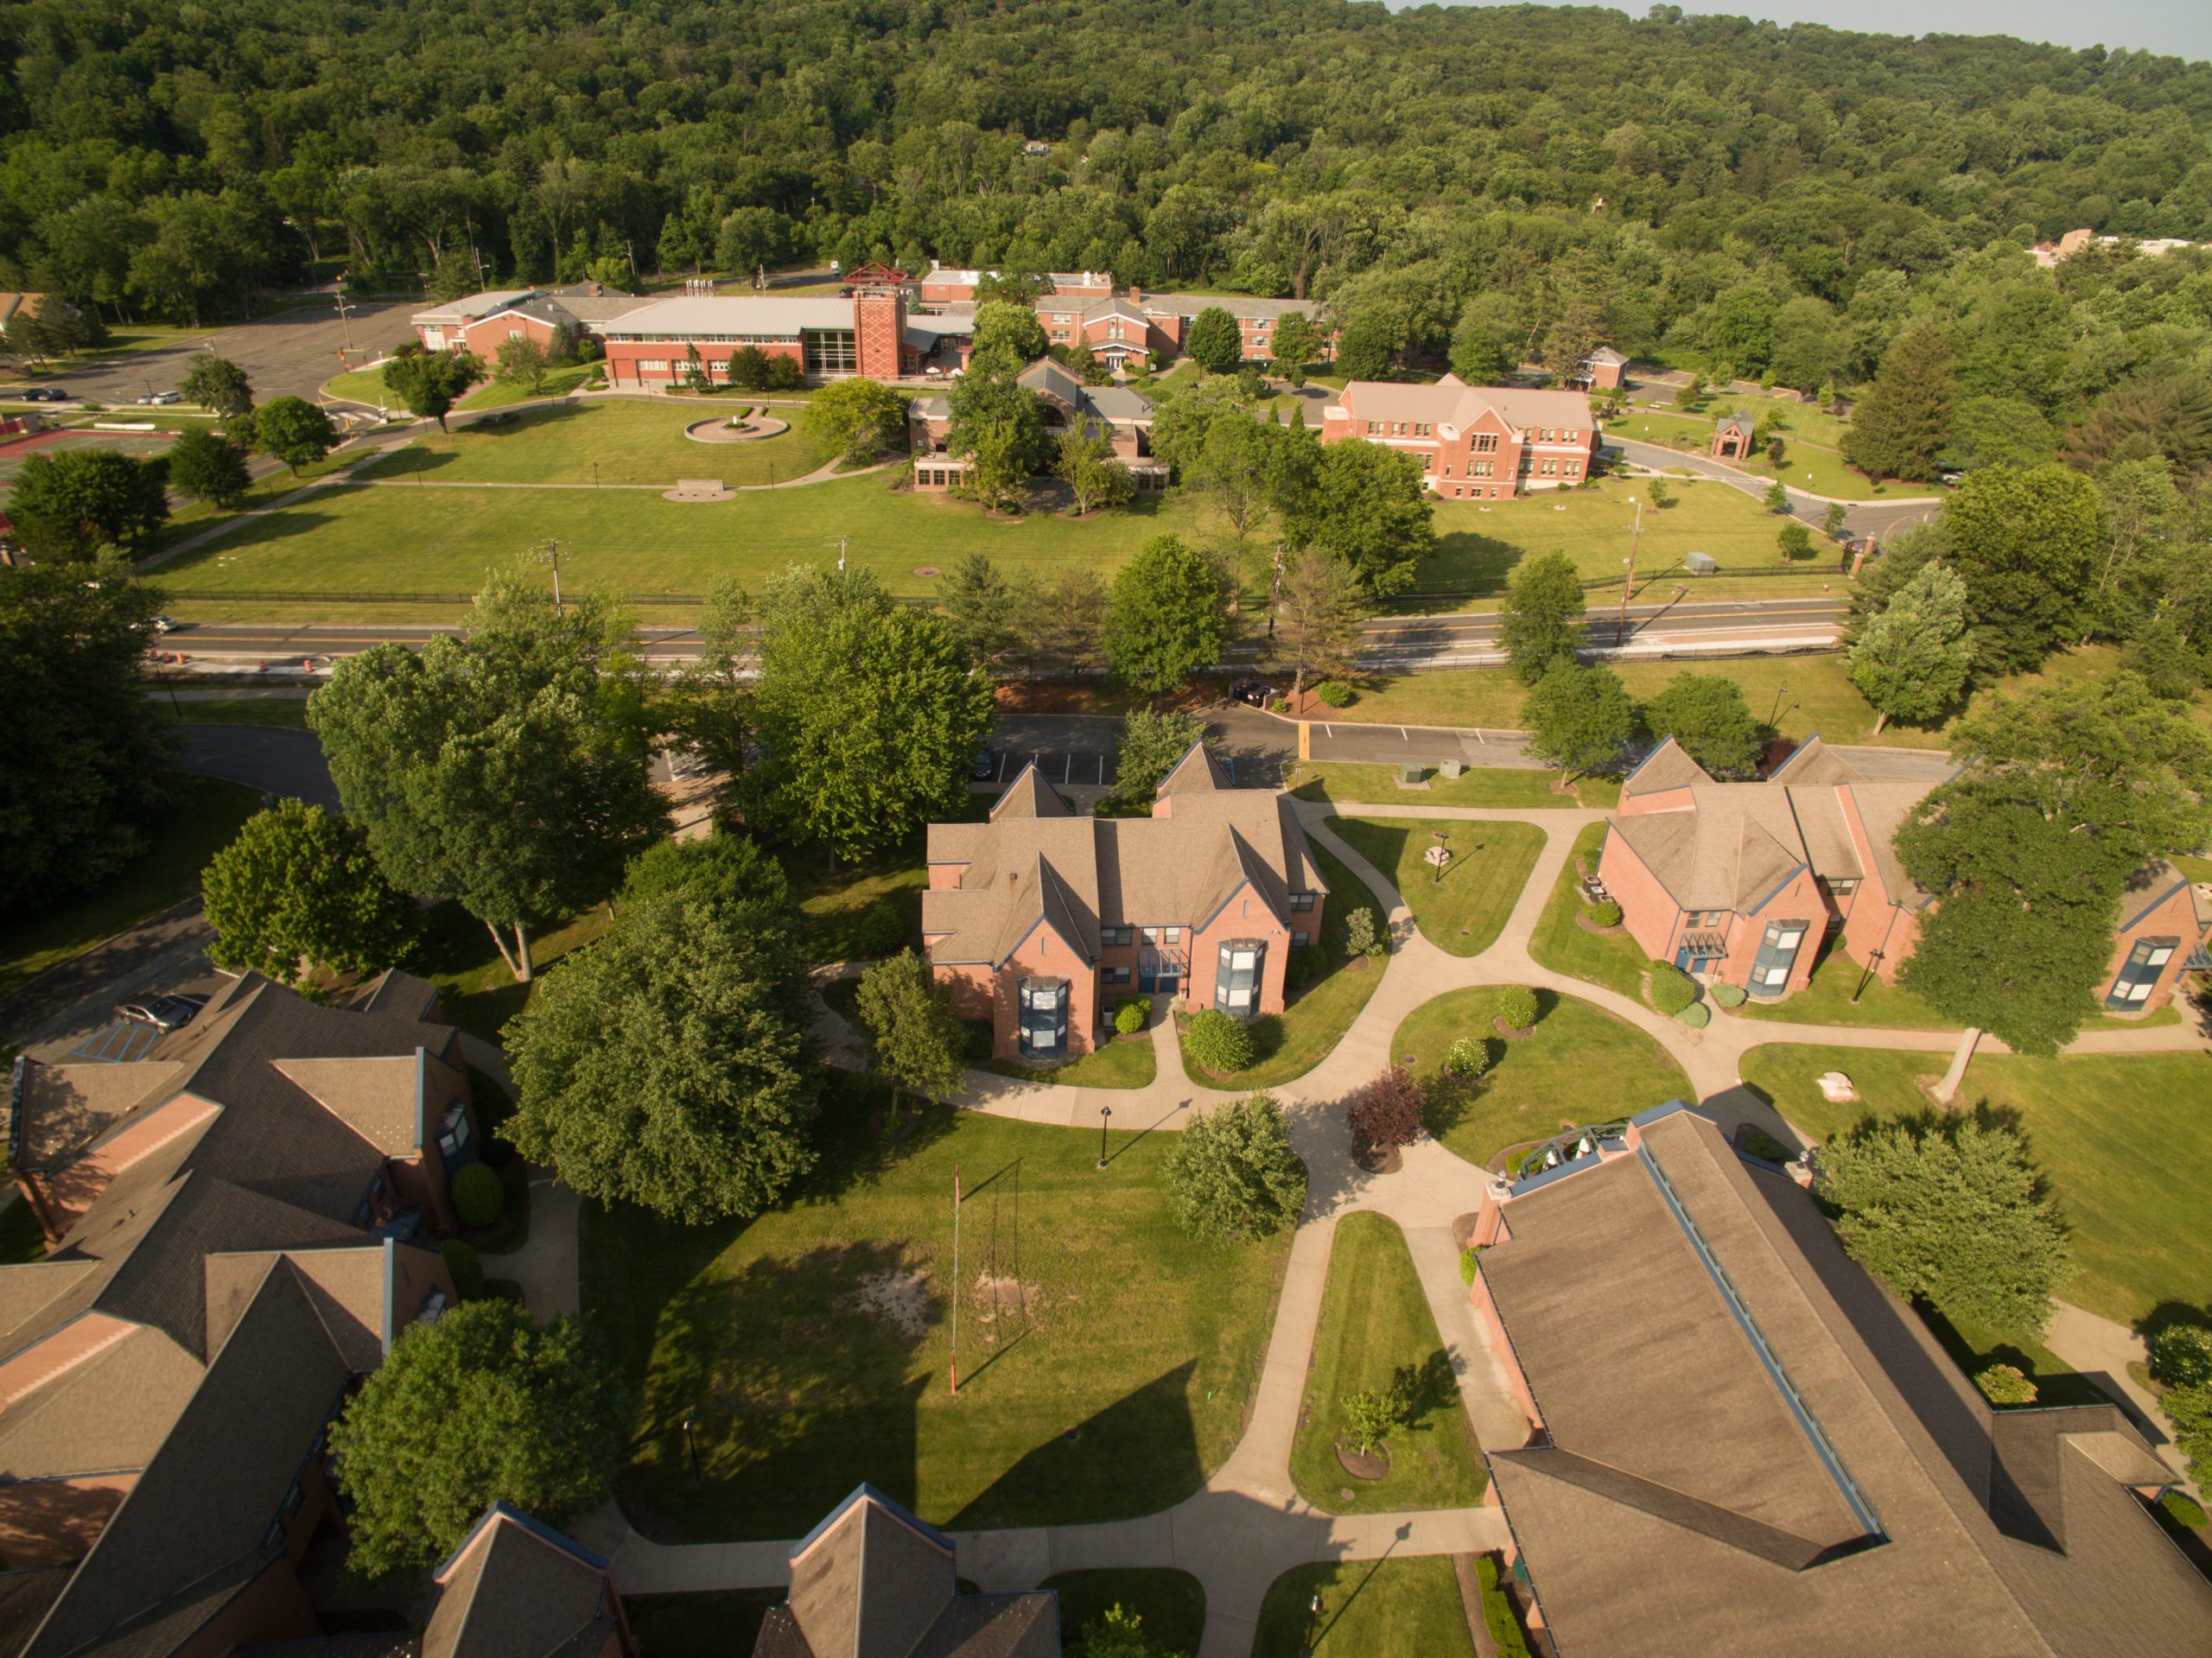 Overhead drone campus image